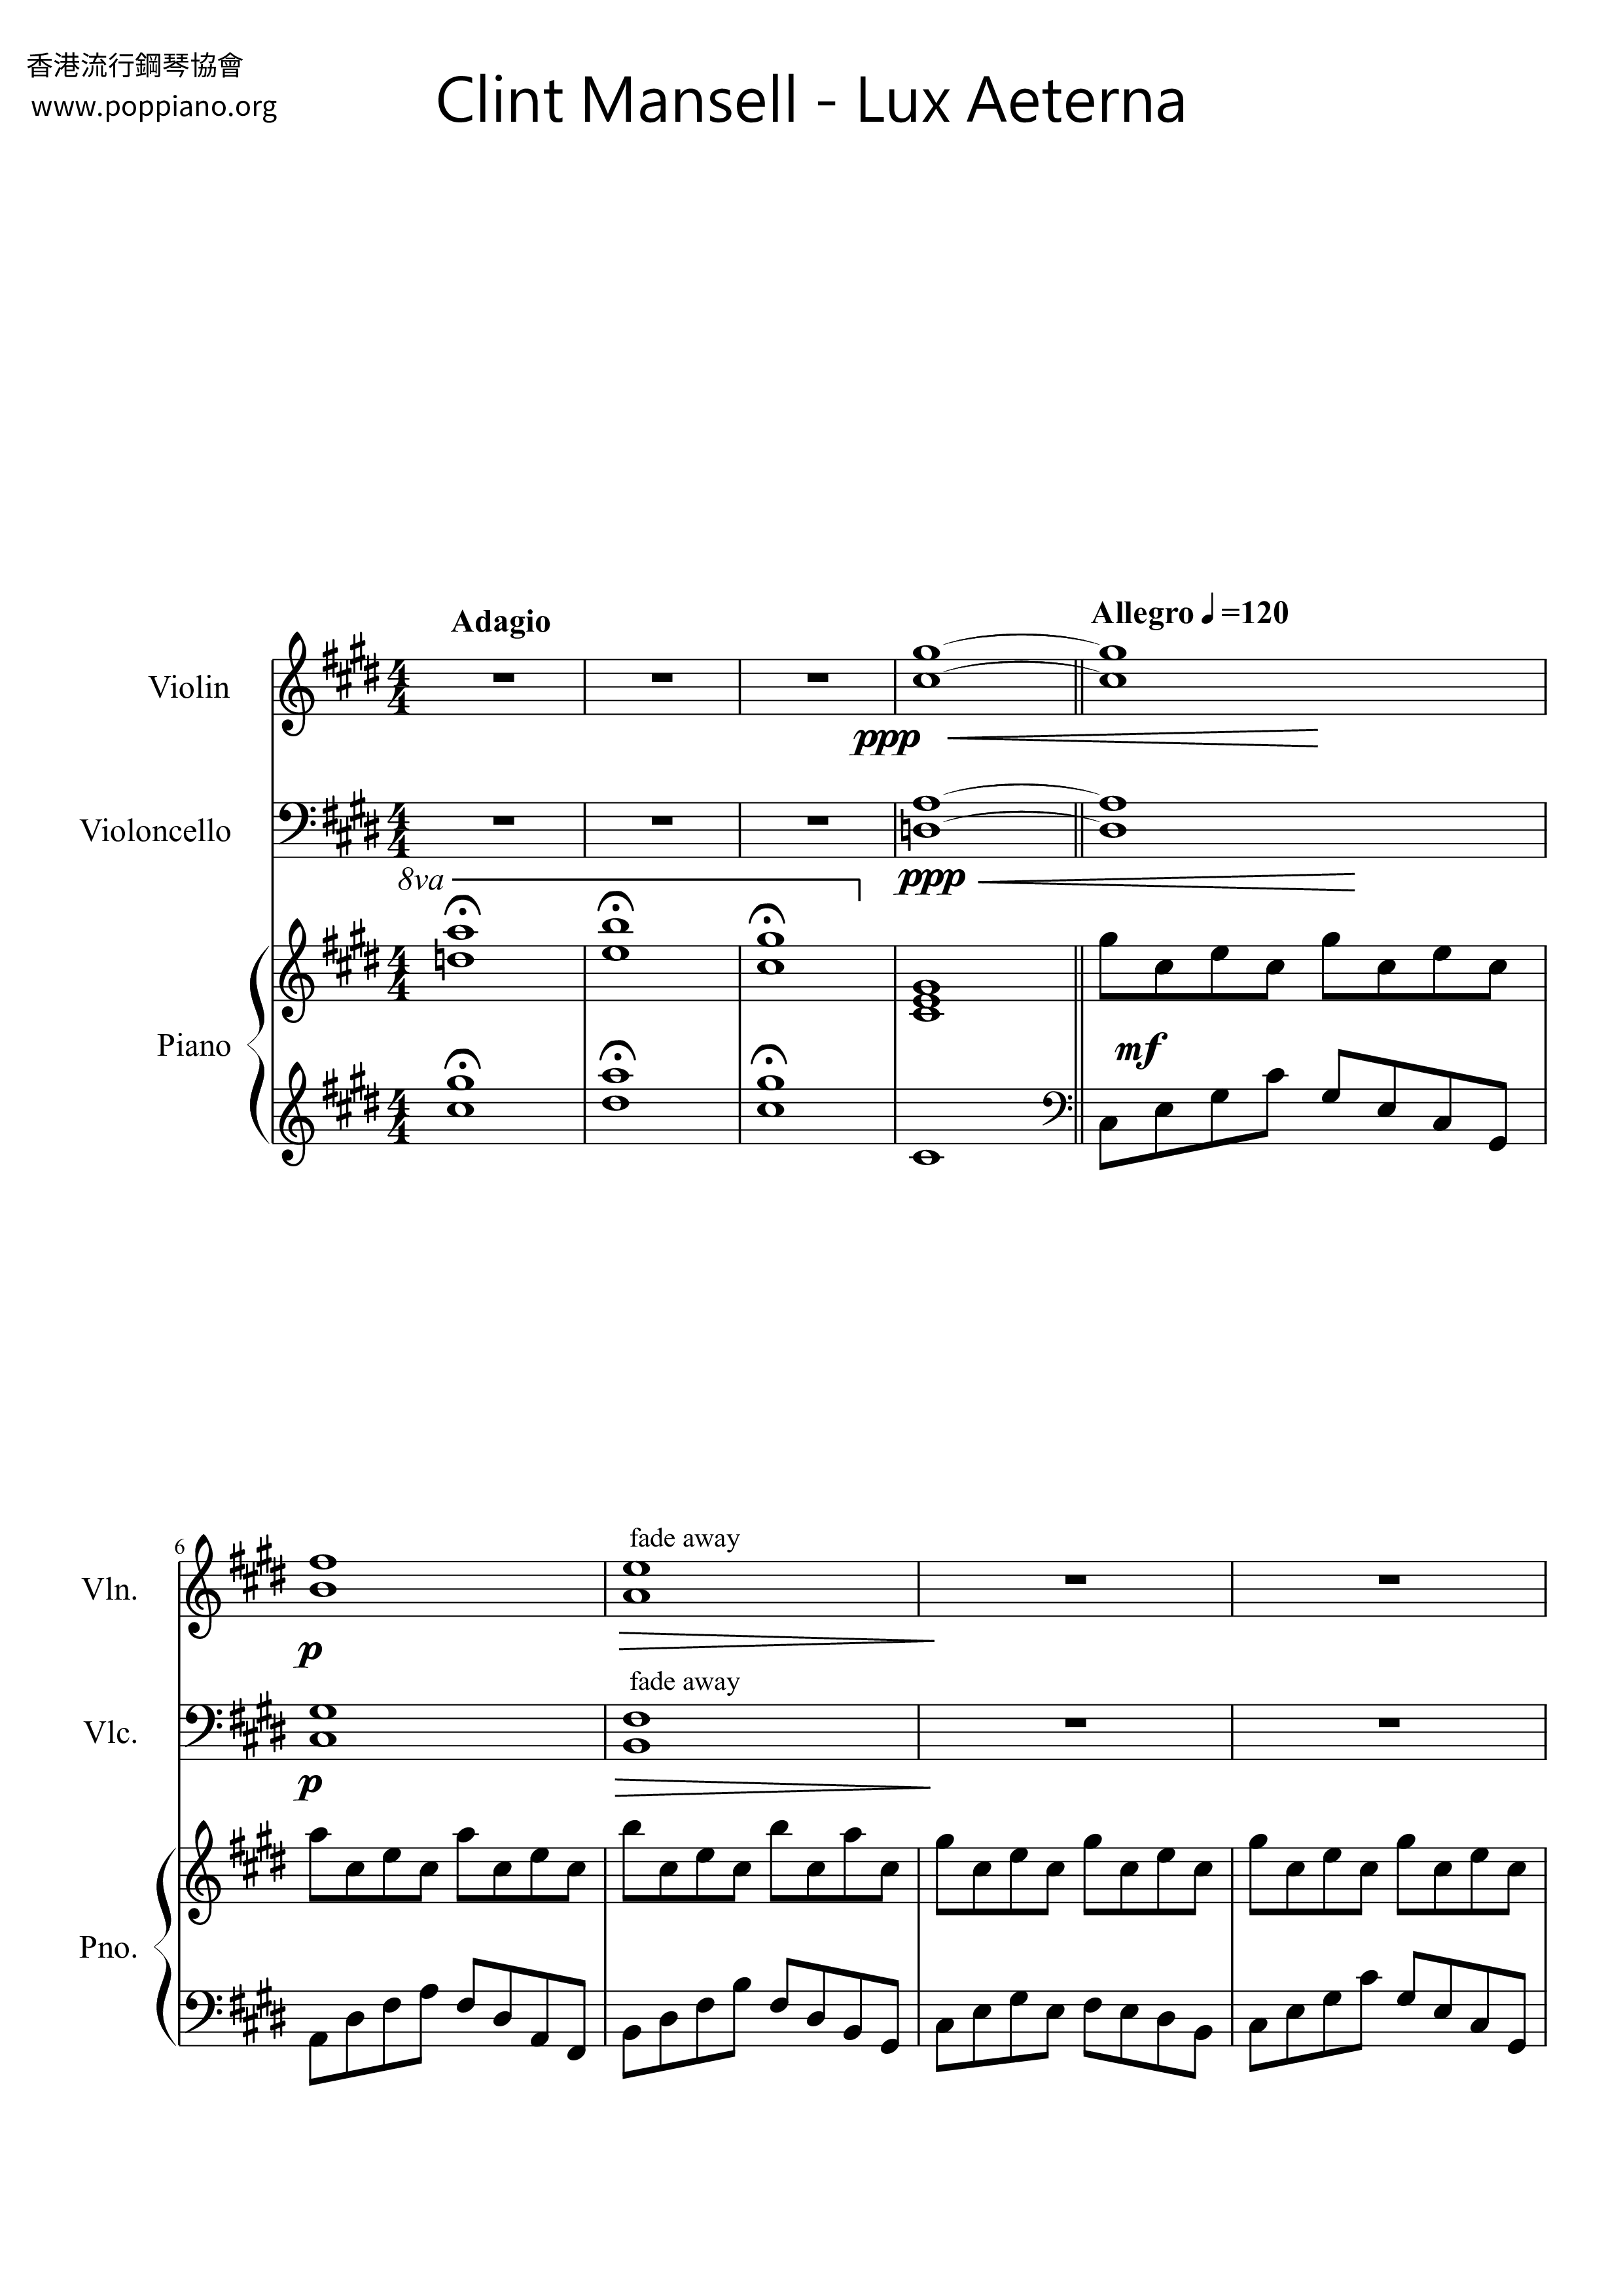 Requiem for a Dream - Lux Aeternaピアノ譜